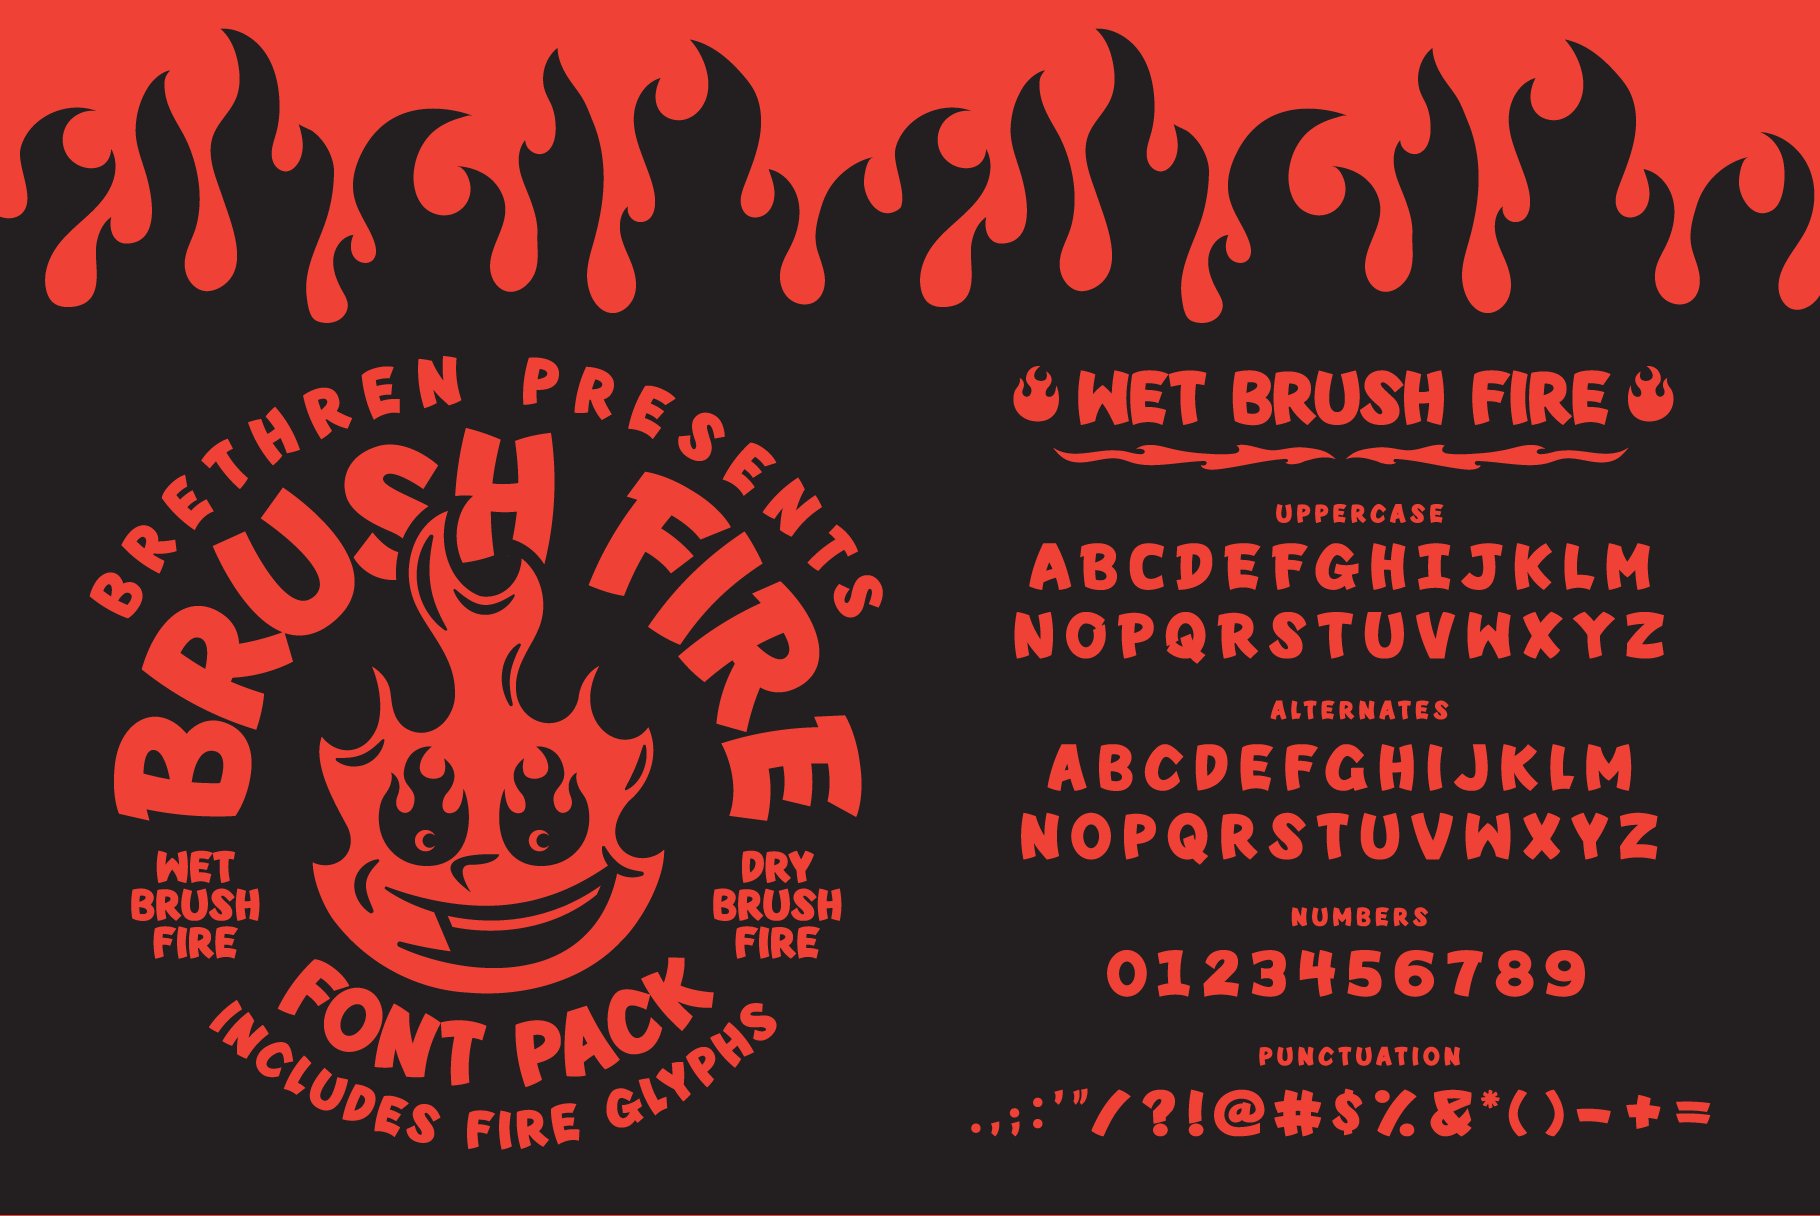 Brush Fire Font Family cover image.